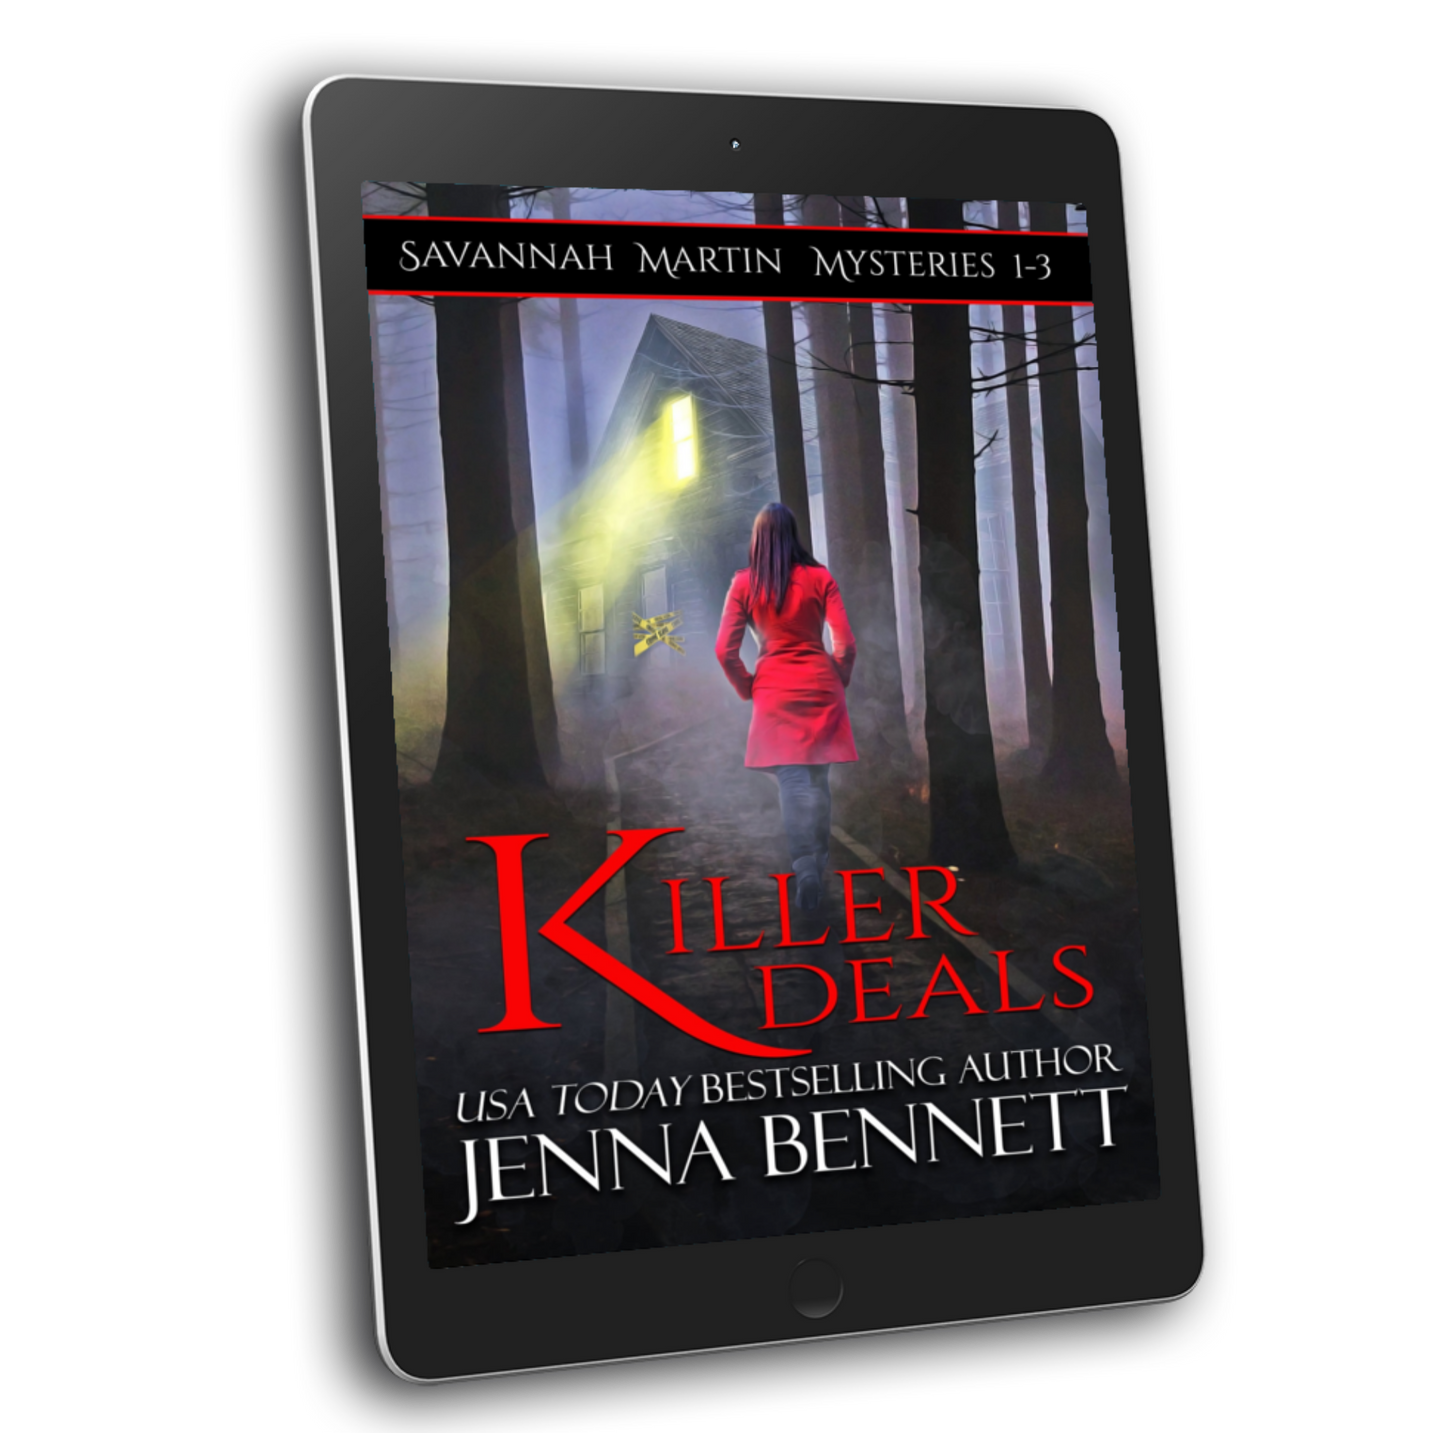 Killer Deals - Savannah Martin Mysteries 1-3